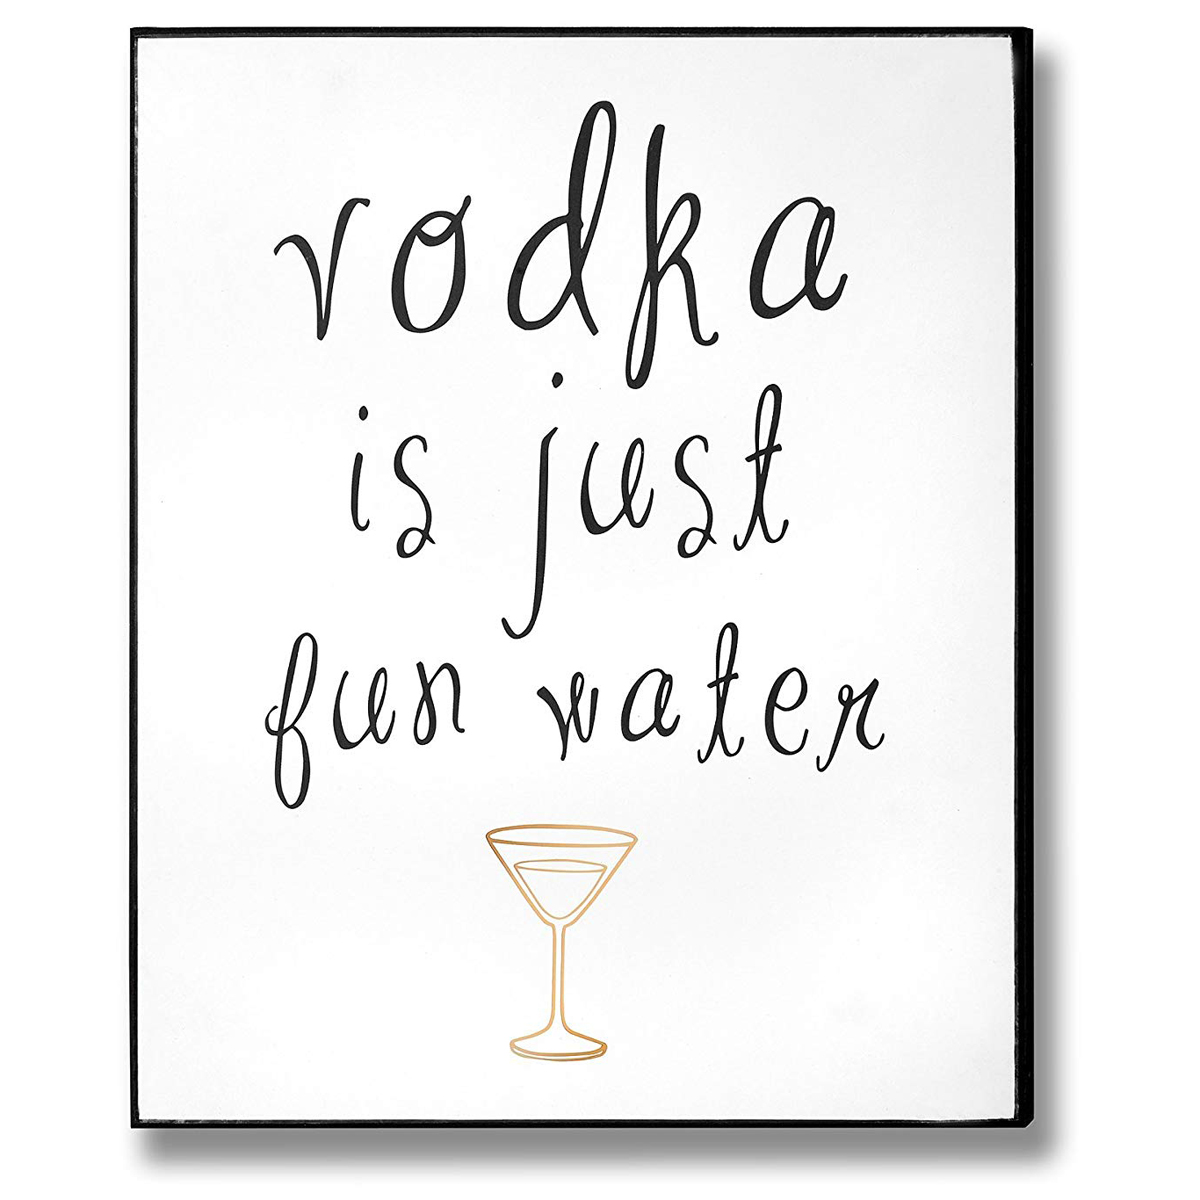 Vodka is just fun water